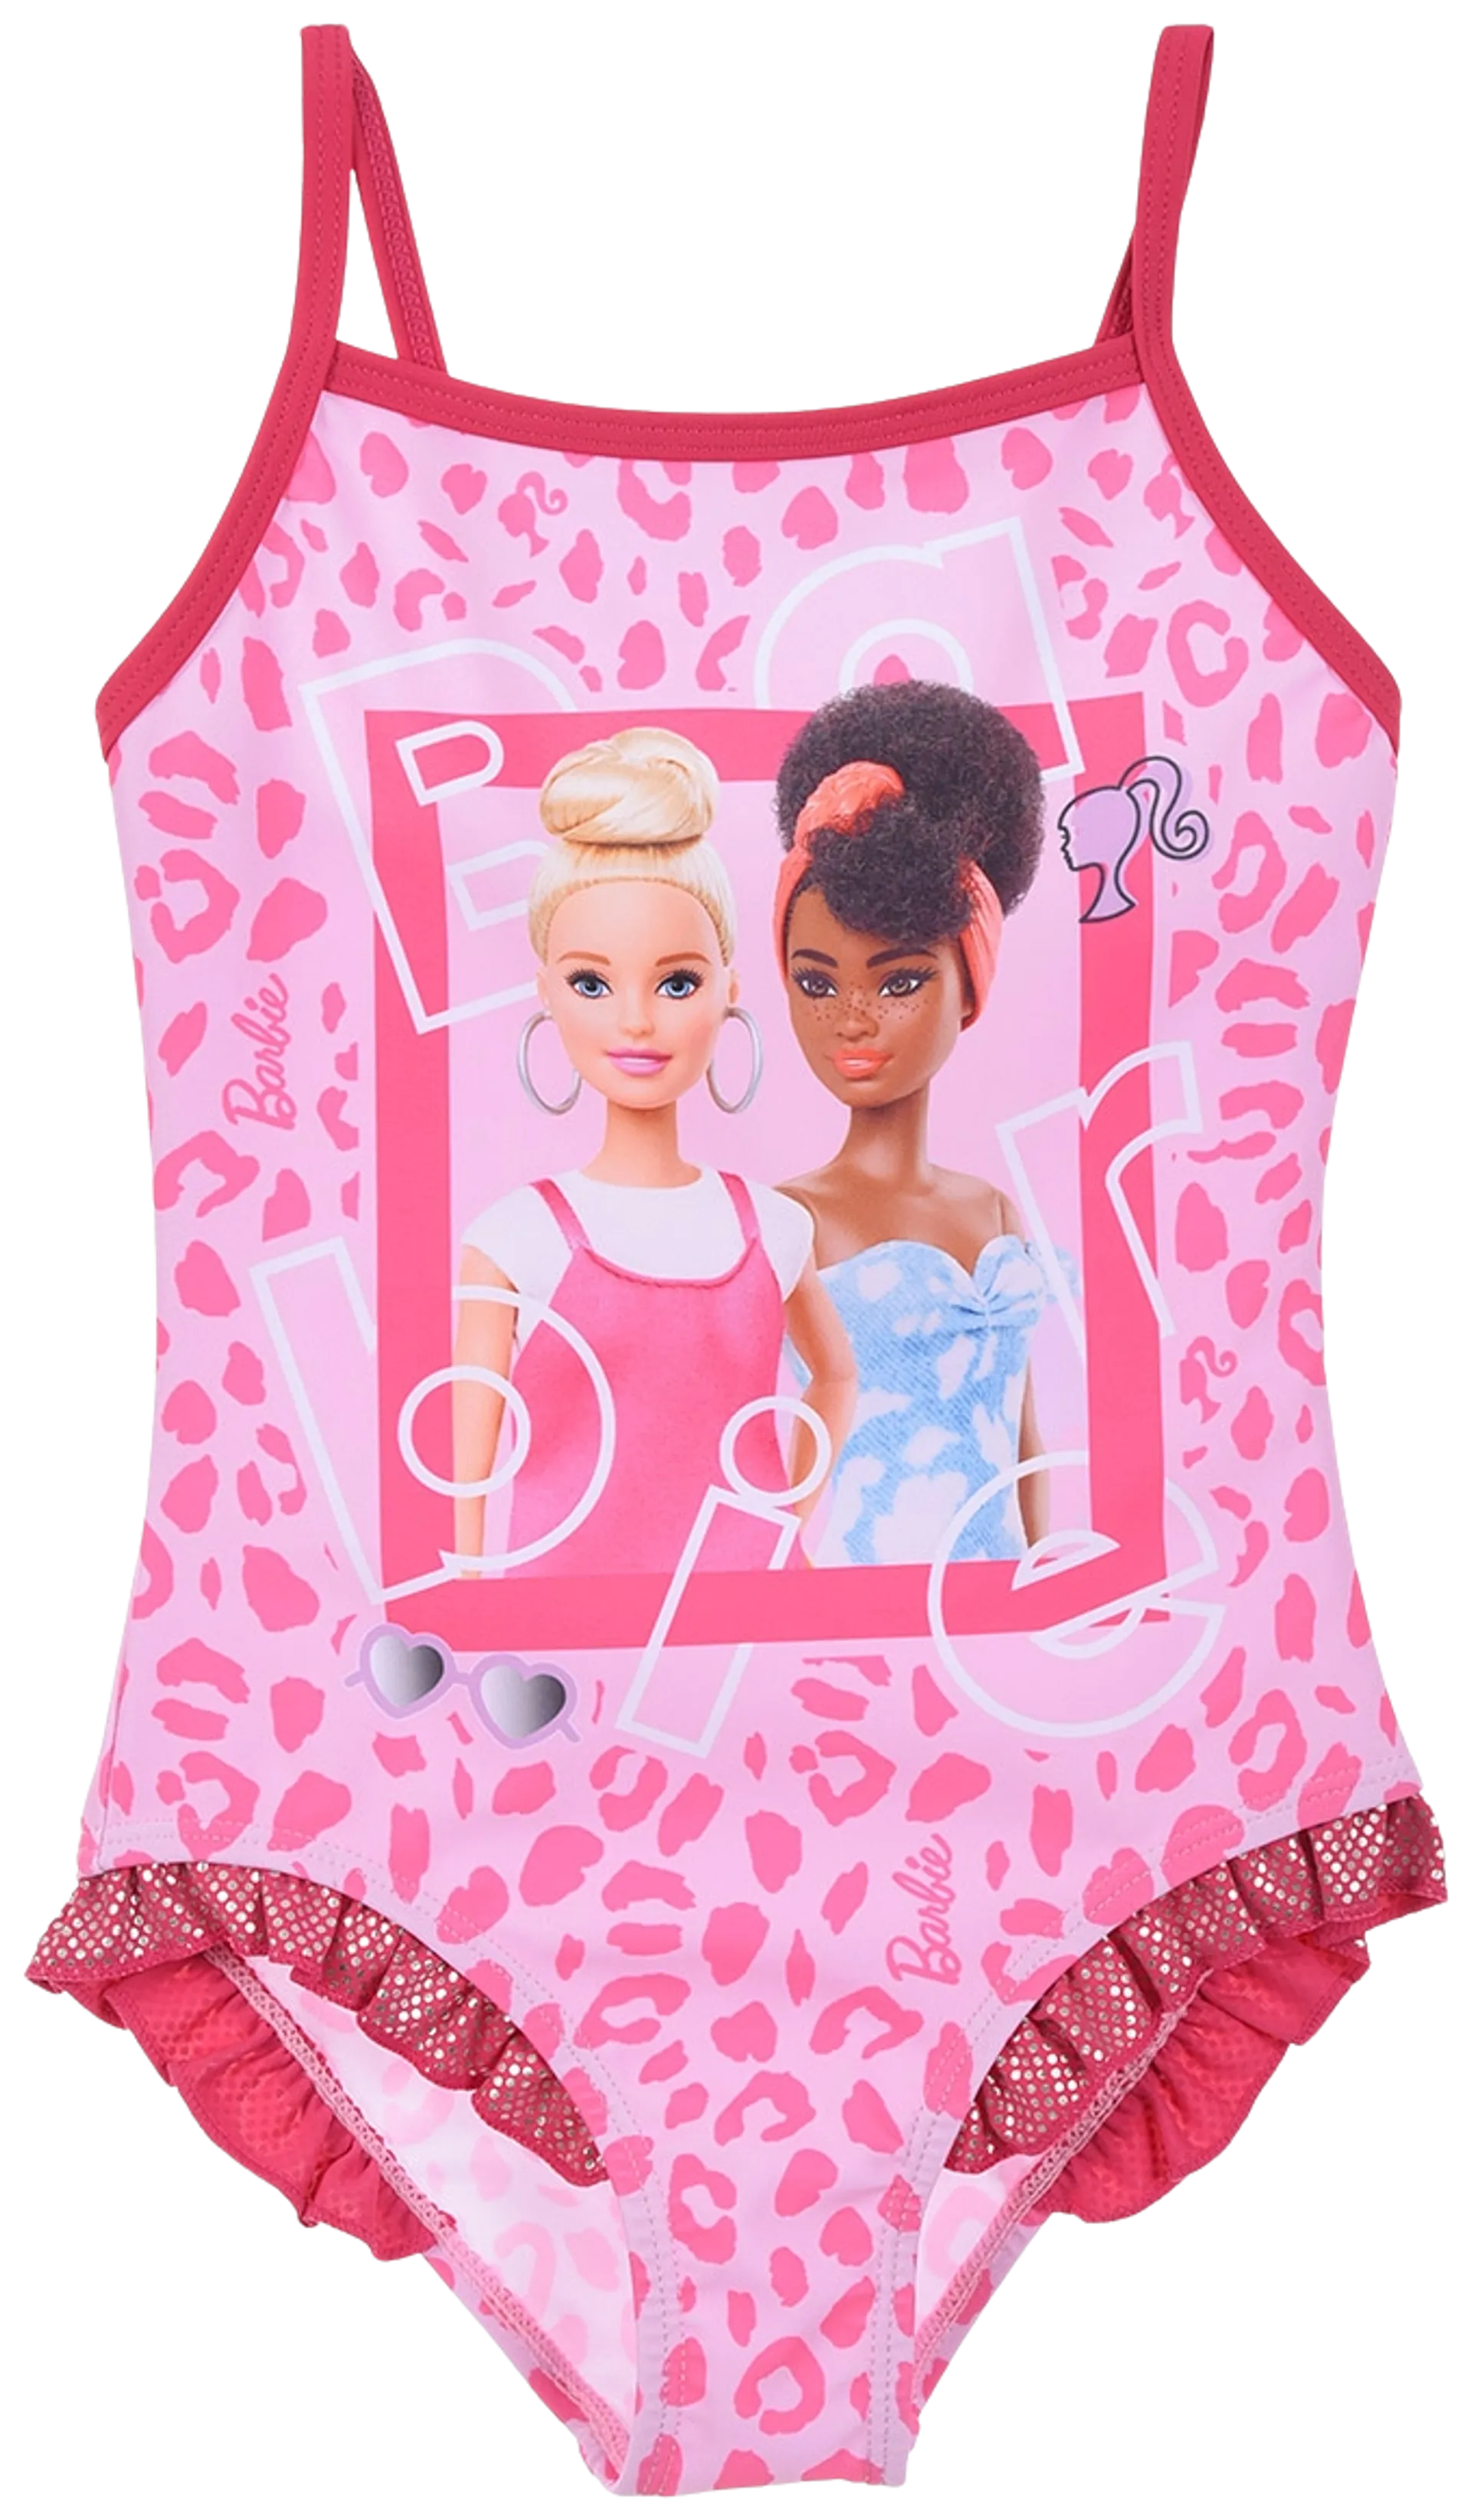 Barbie lasten uimapuku HW6808 - pink - 1